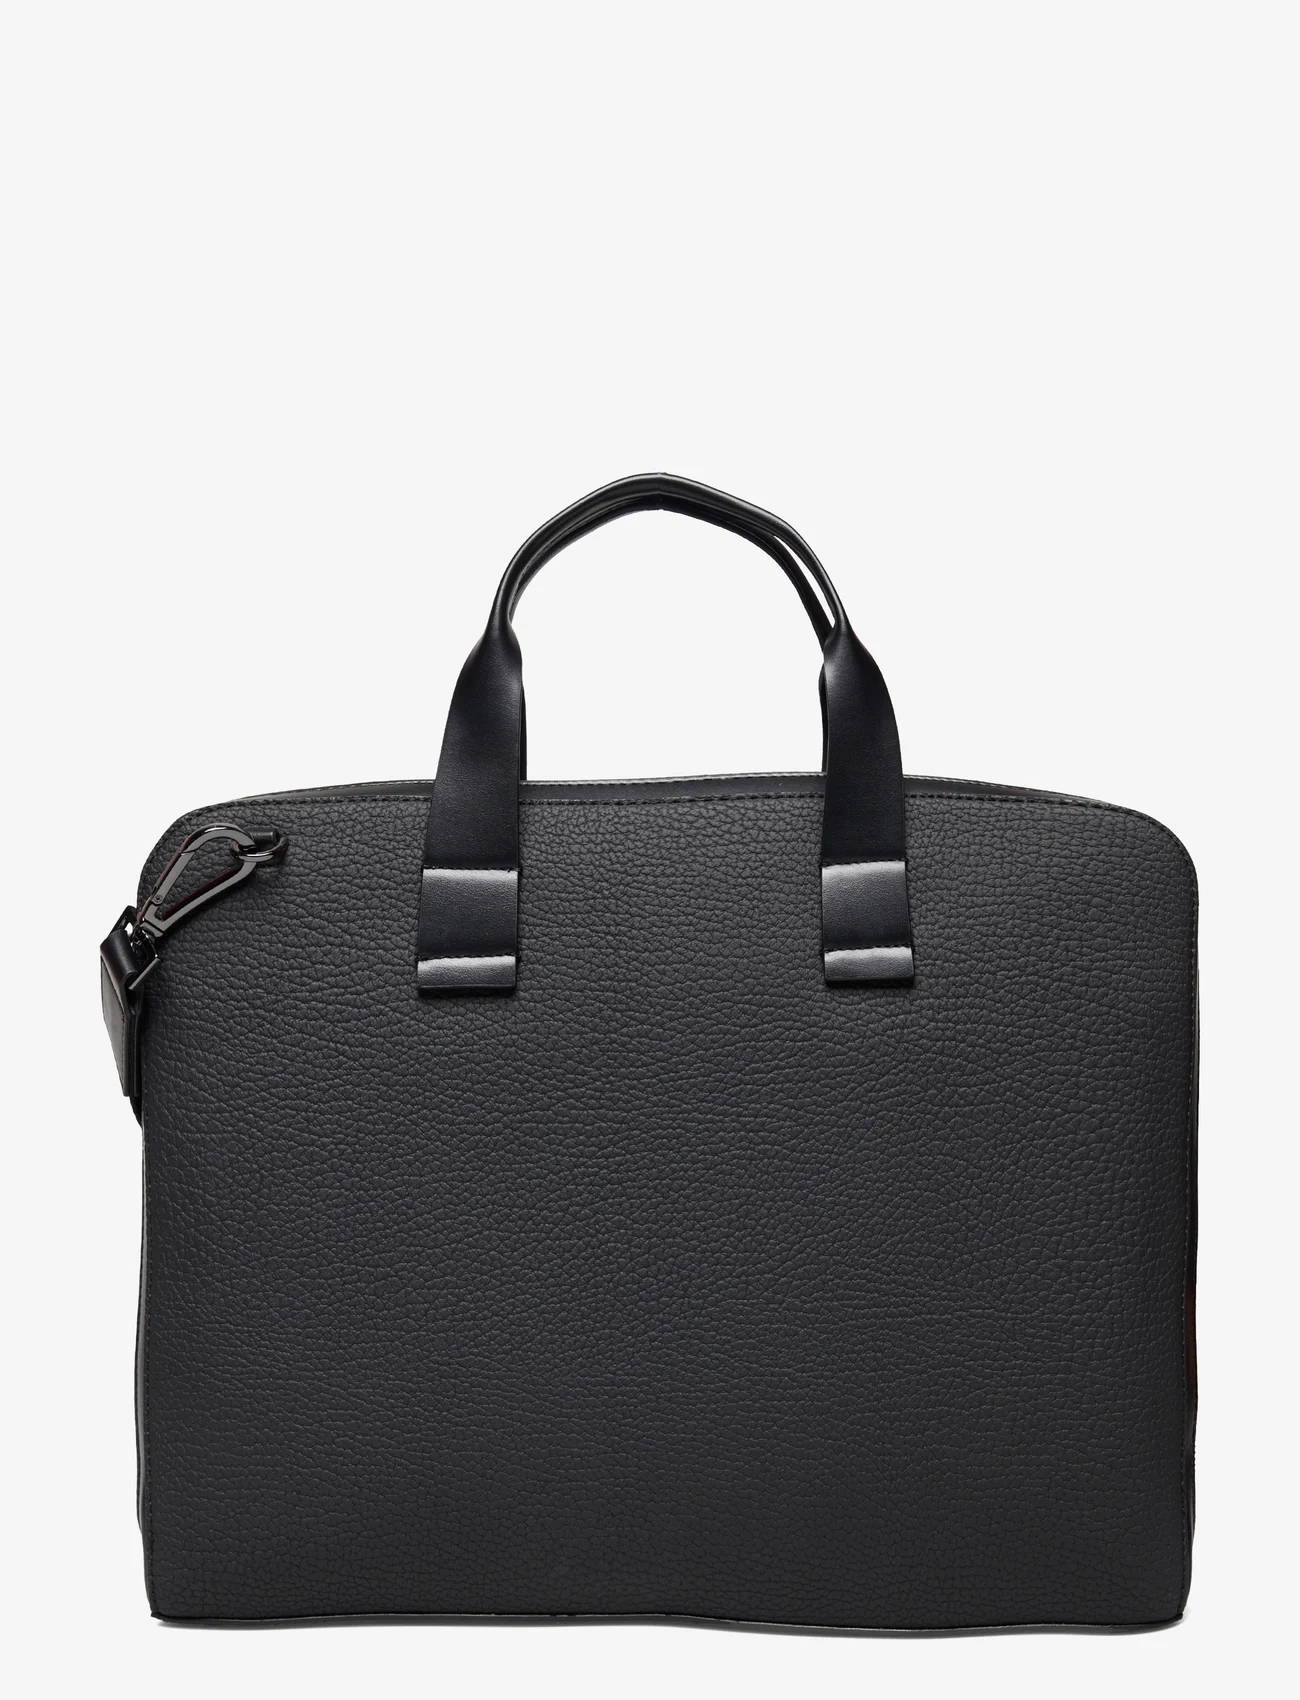 Calvin Klein - MODERN BAR SLIM LAPTOP BAG - laptoptaschen - ck black - 1